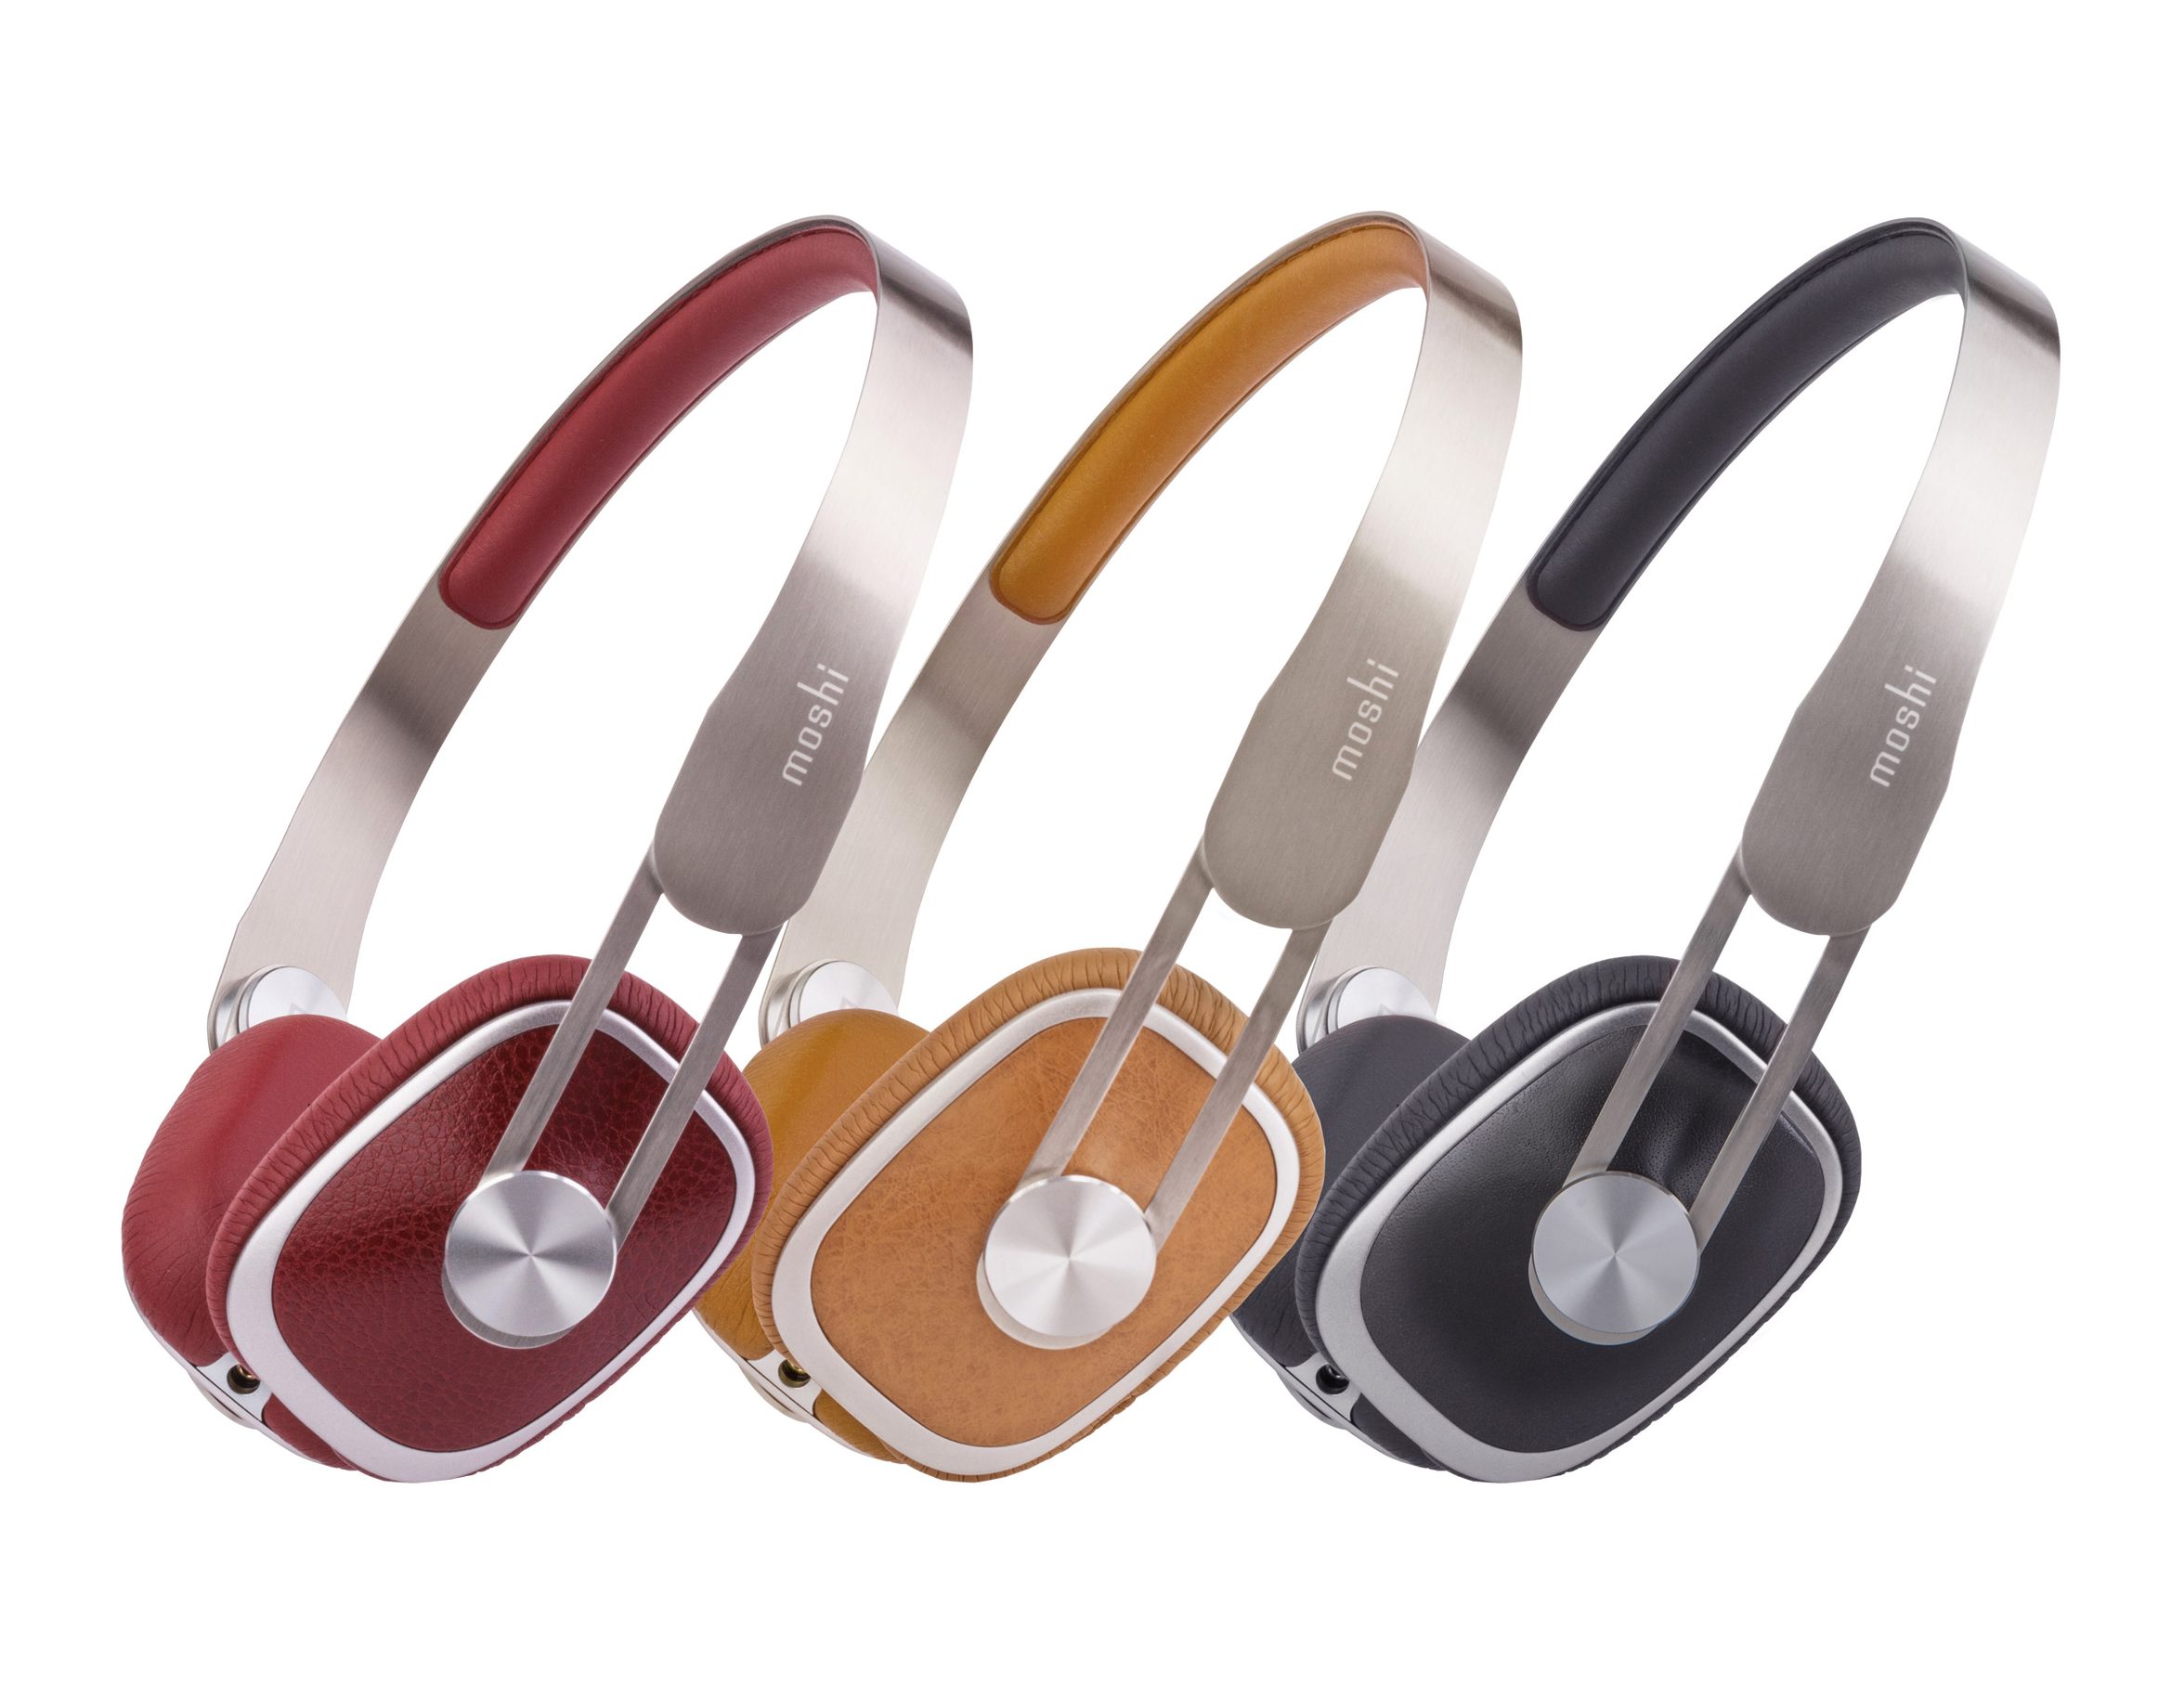 Moshi updates Avanti headphone collection with onyx-black version